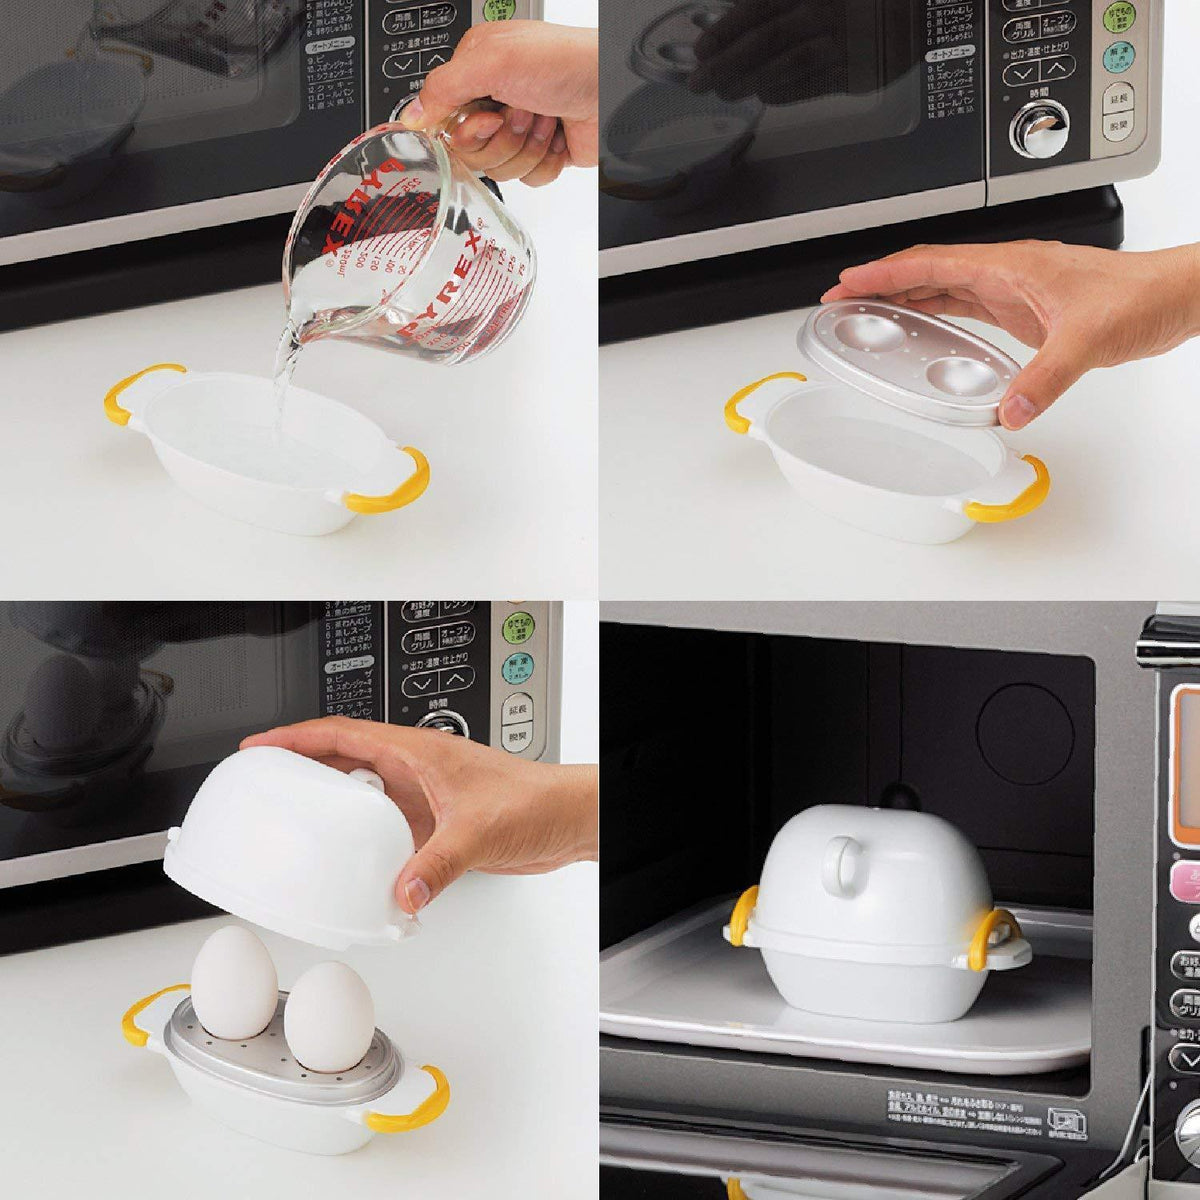 Chicken Egg Cooker For Microwave - Inspire Uplift